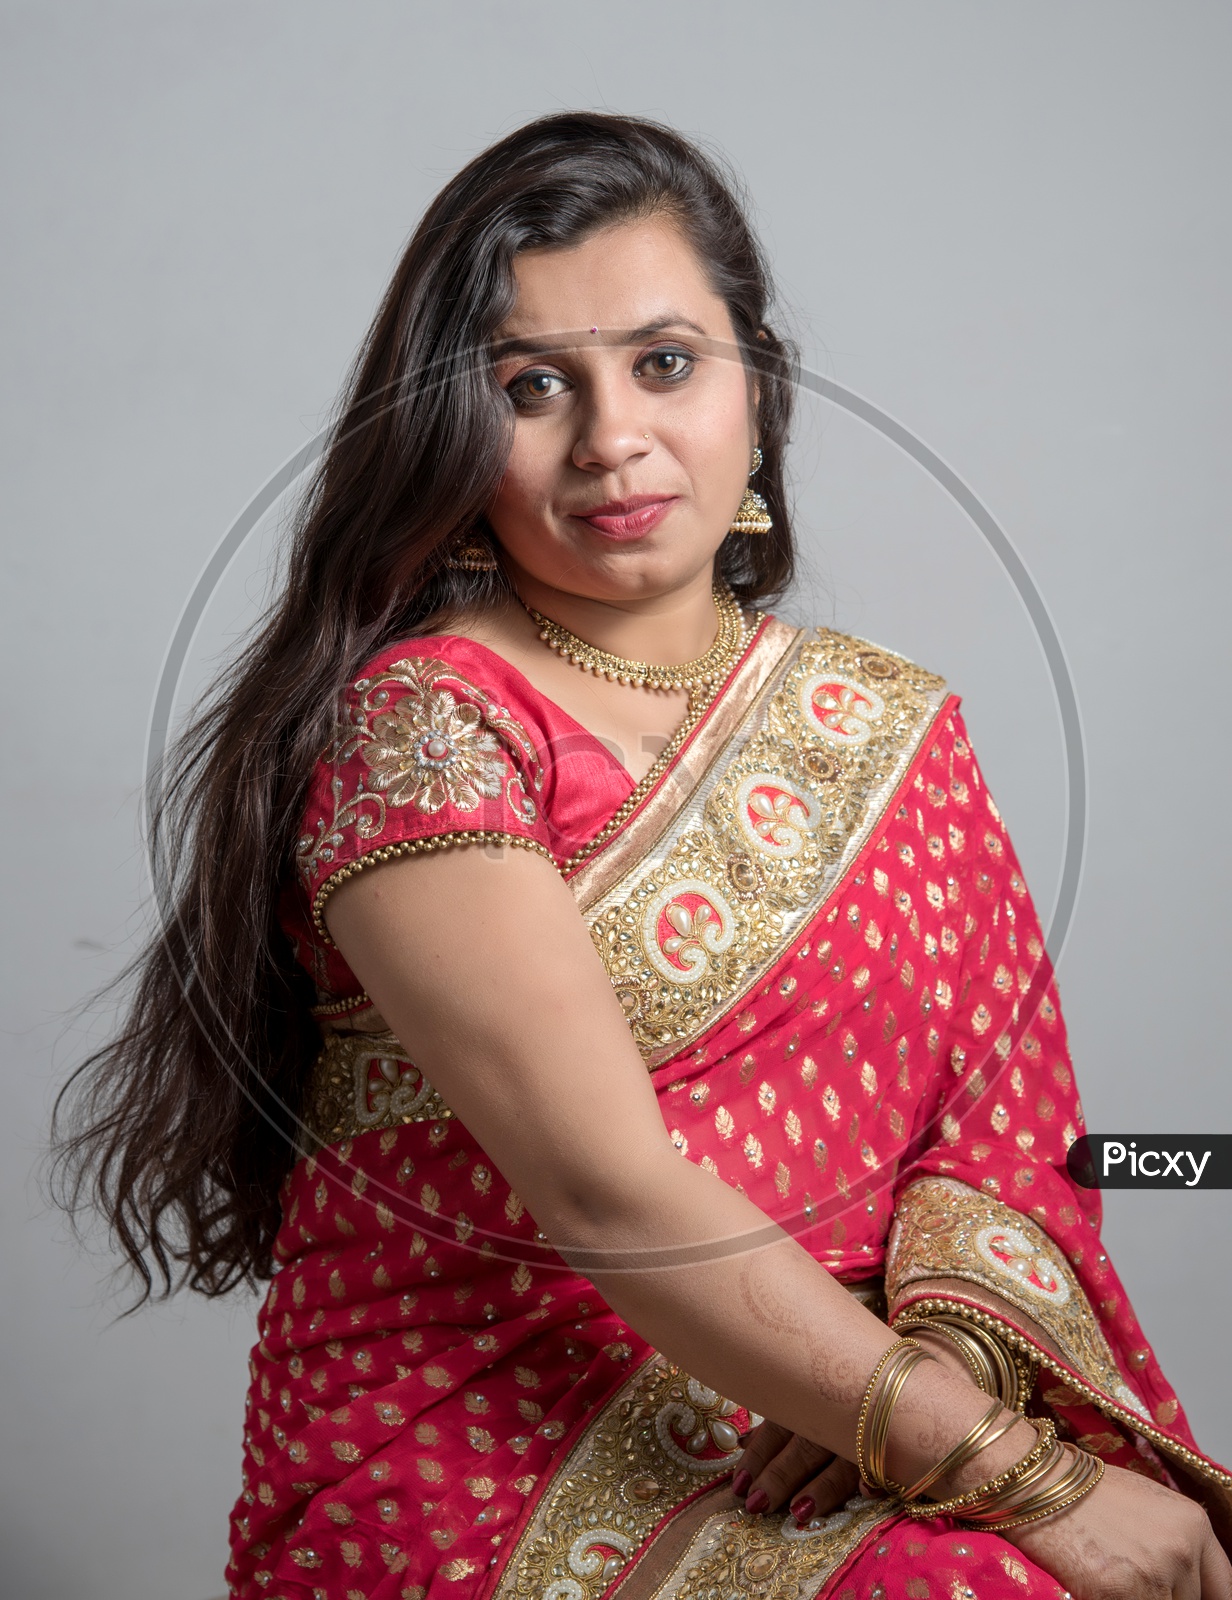 Indian fashion model posing in sari - Stock Photo - Masterfile - Premium  Royalty-Free, Code: 630-03482483